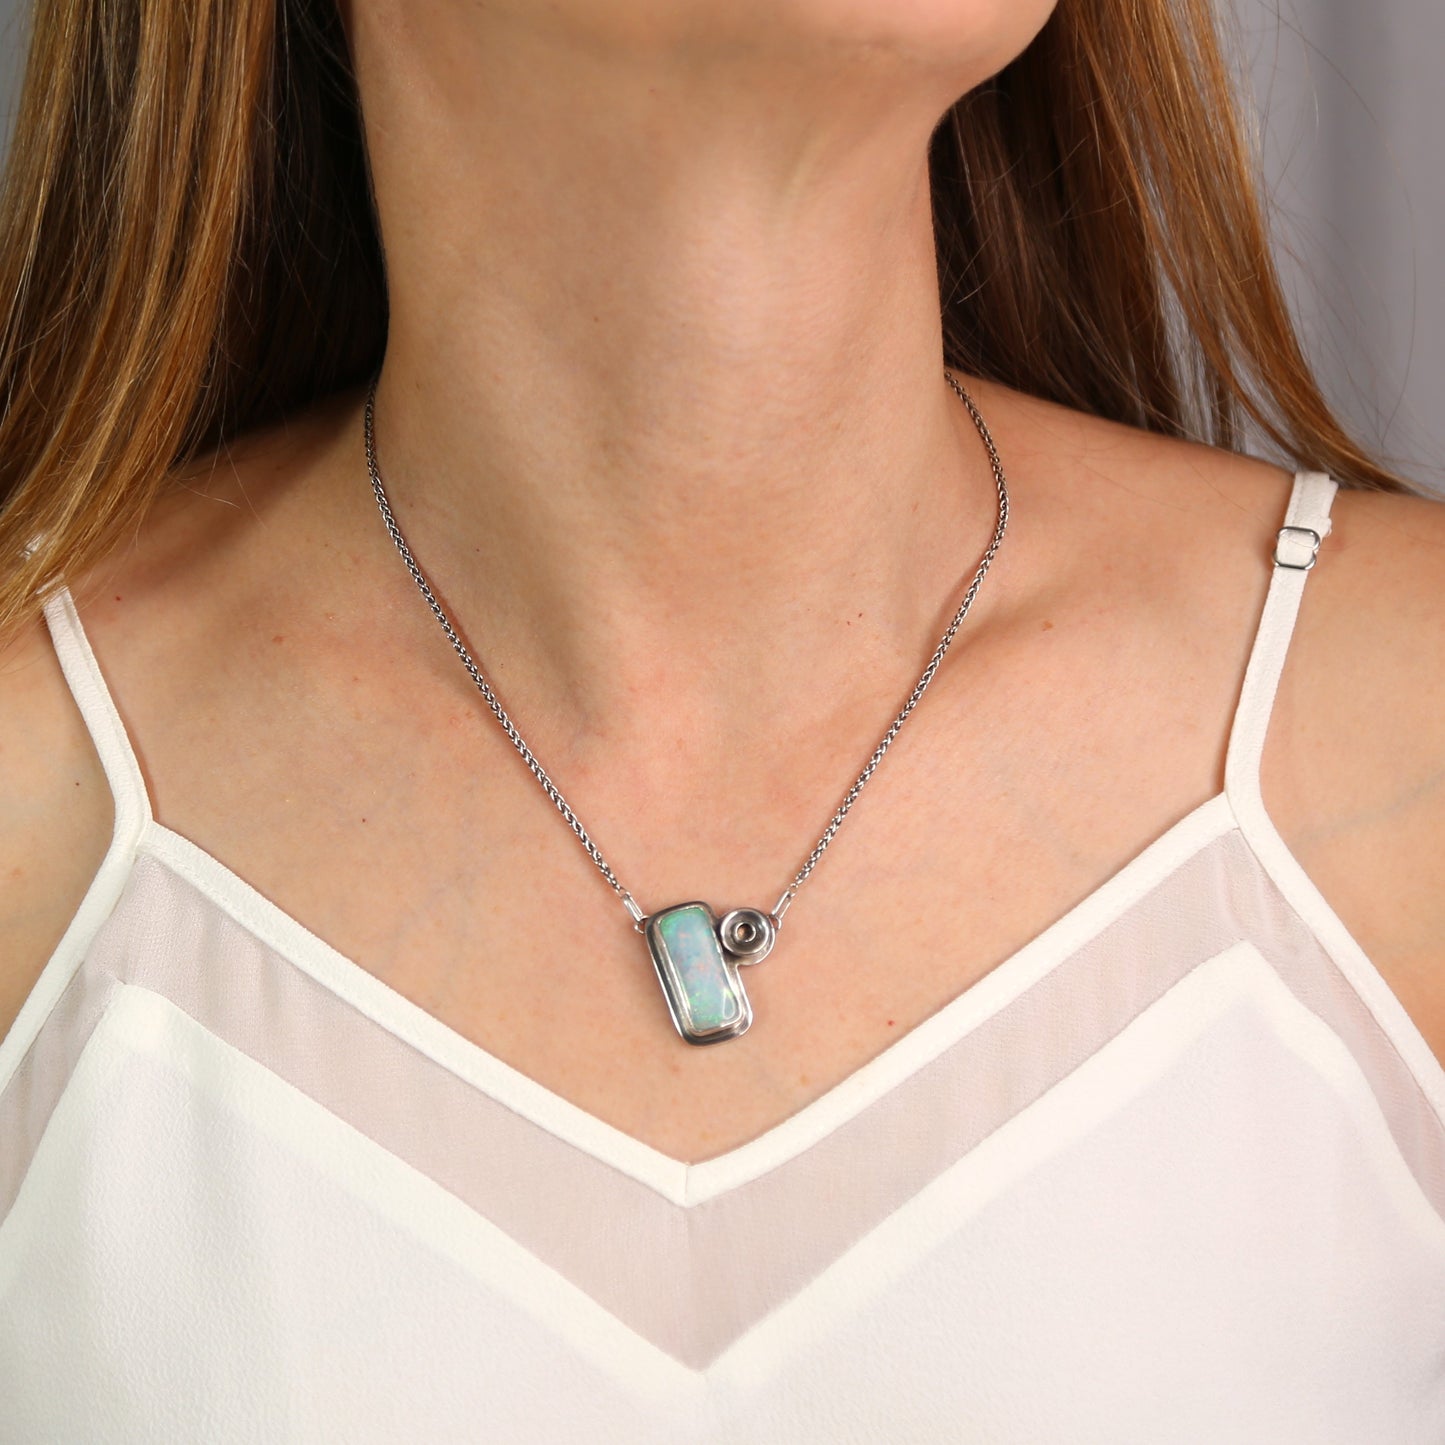 Atlantis Opal Pastel Gemstone set in an Architectural Design - Sterling Silver Necklace